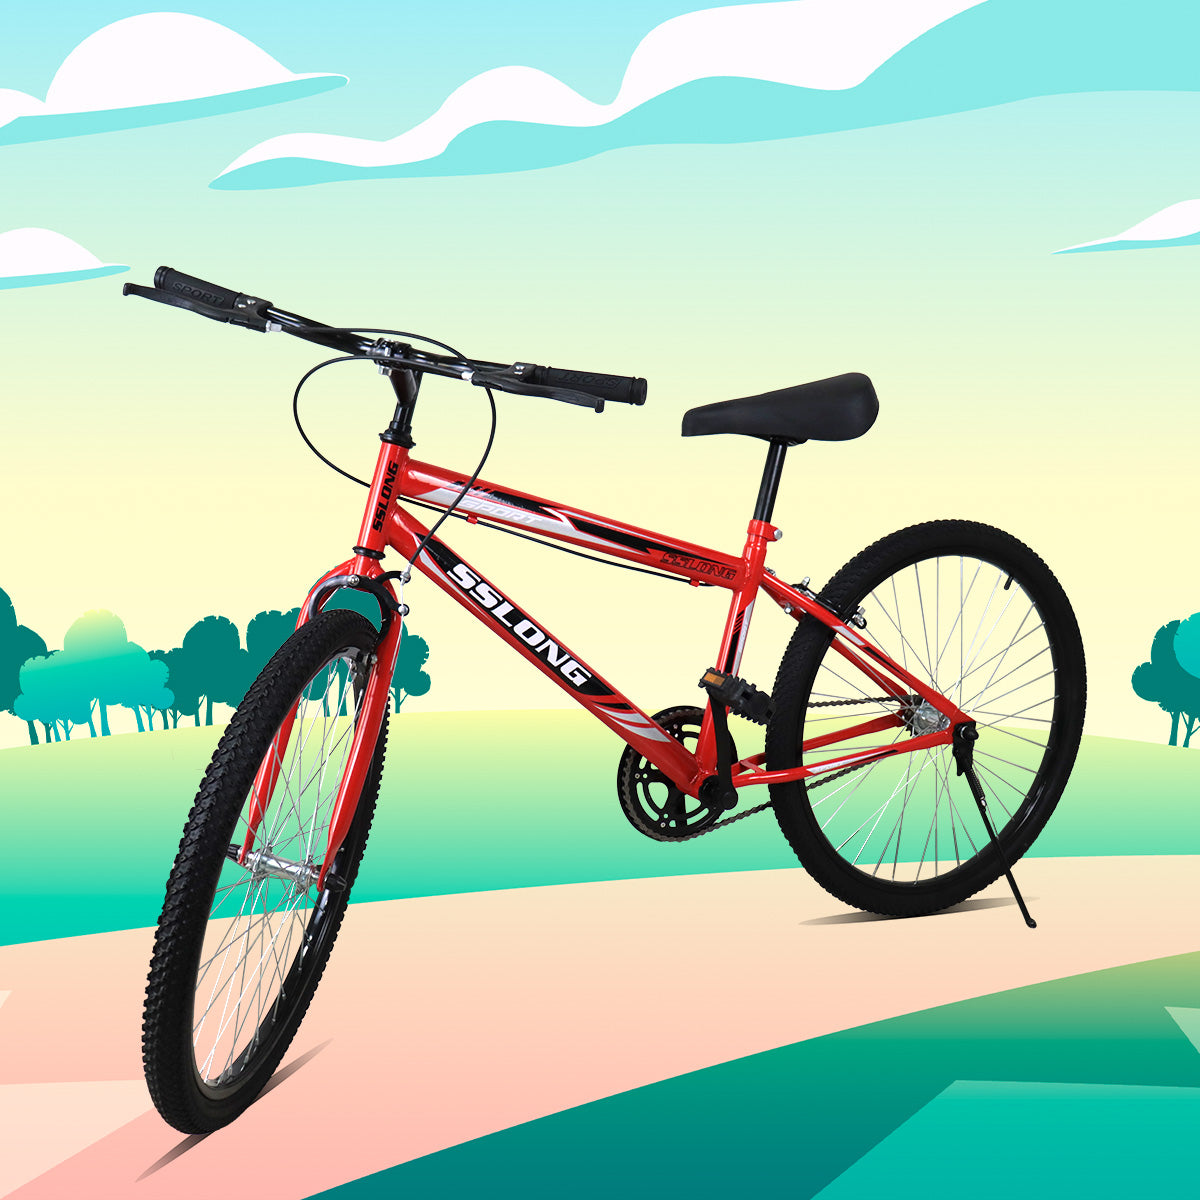 Bicicletas para Adulto – Waldo's